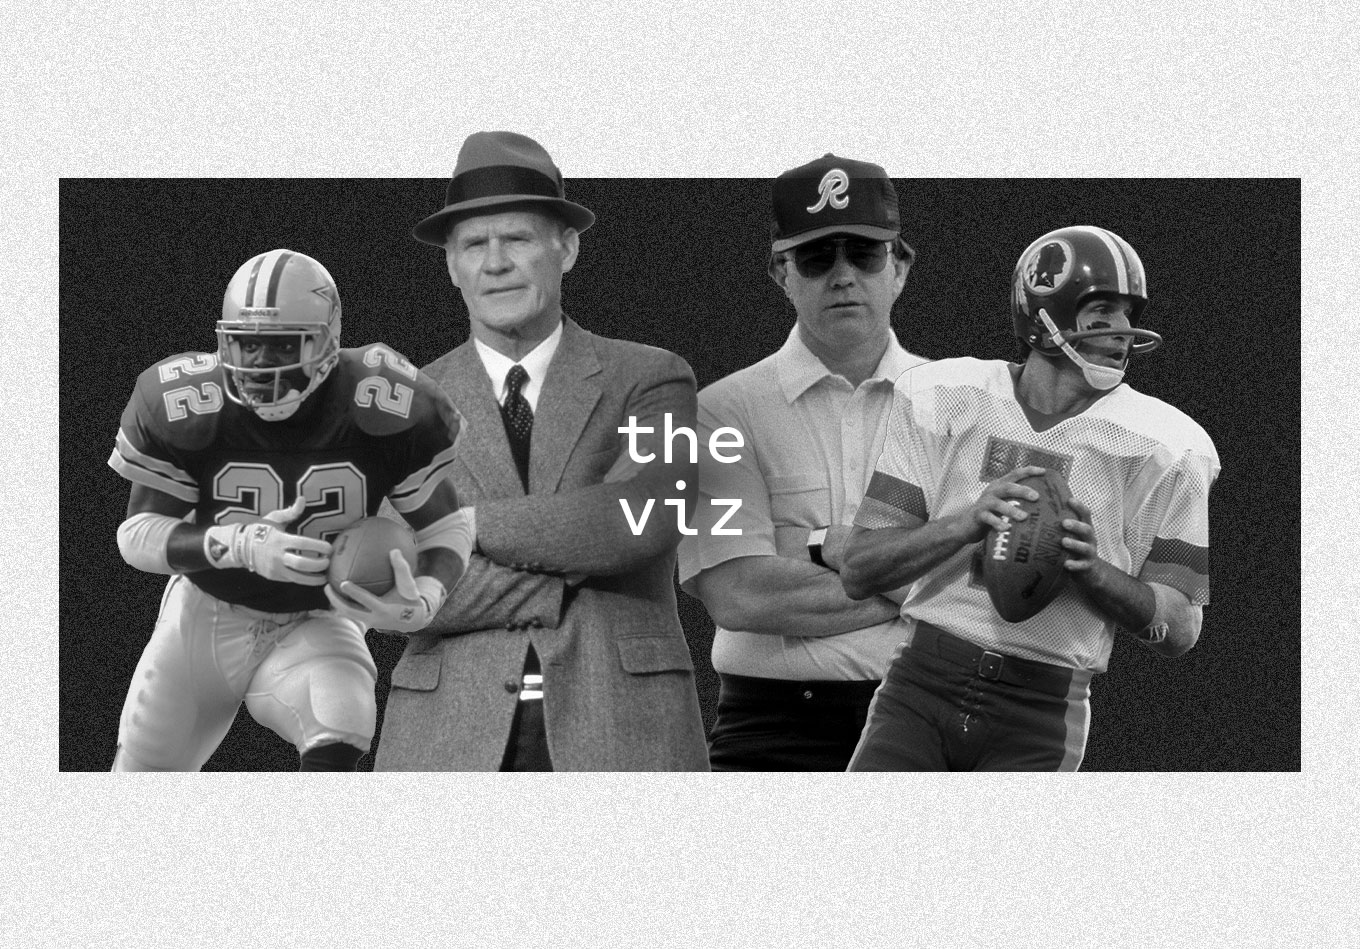 The Dallas Cowboys-Washington Commanders Rivalry Through Time: The Viz